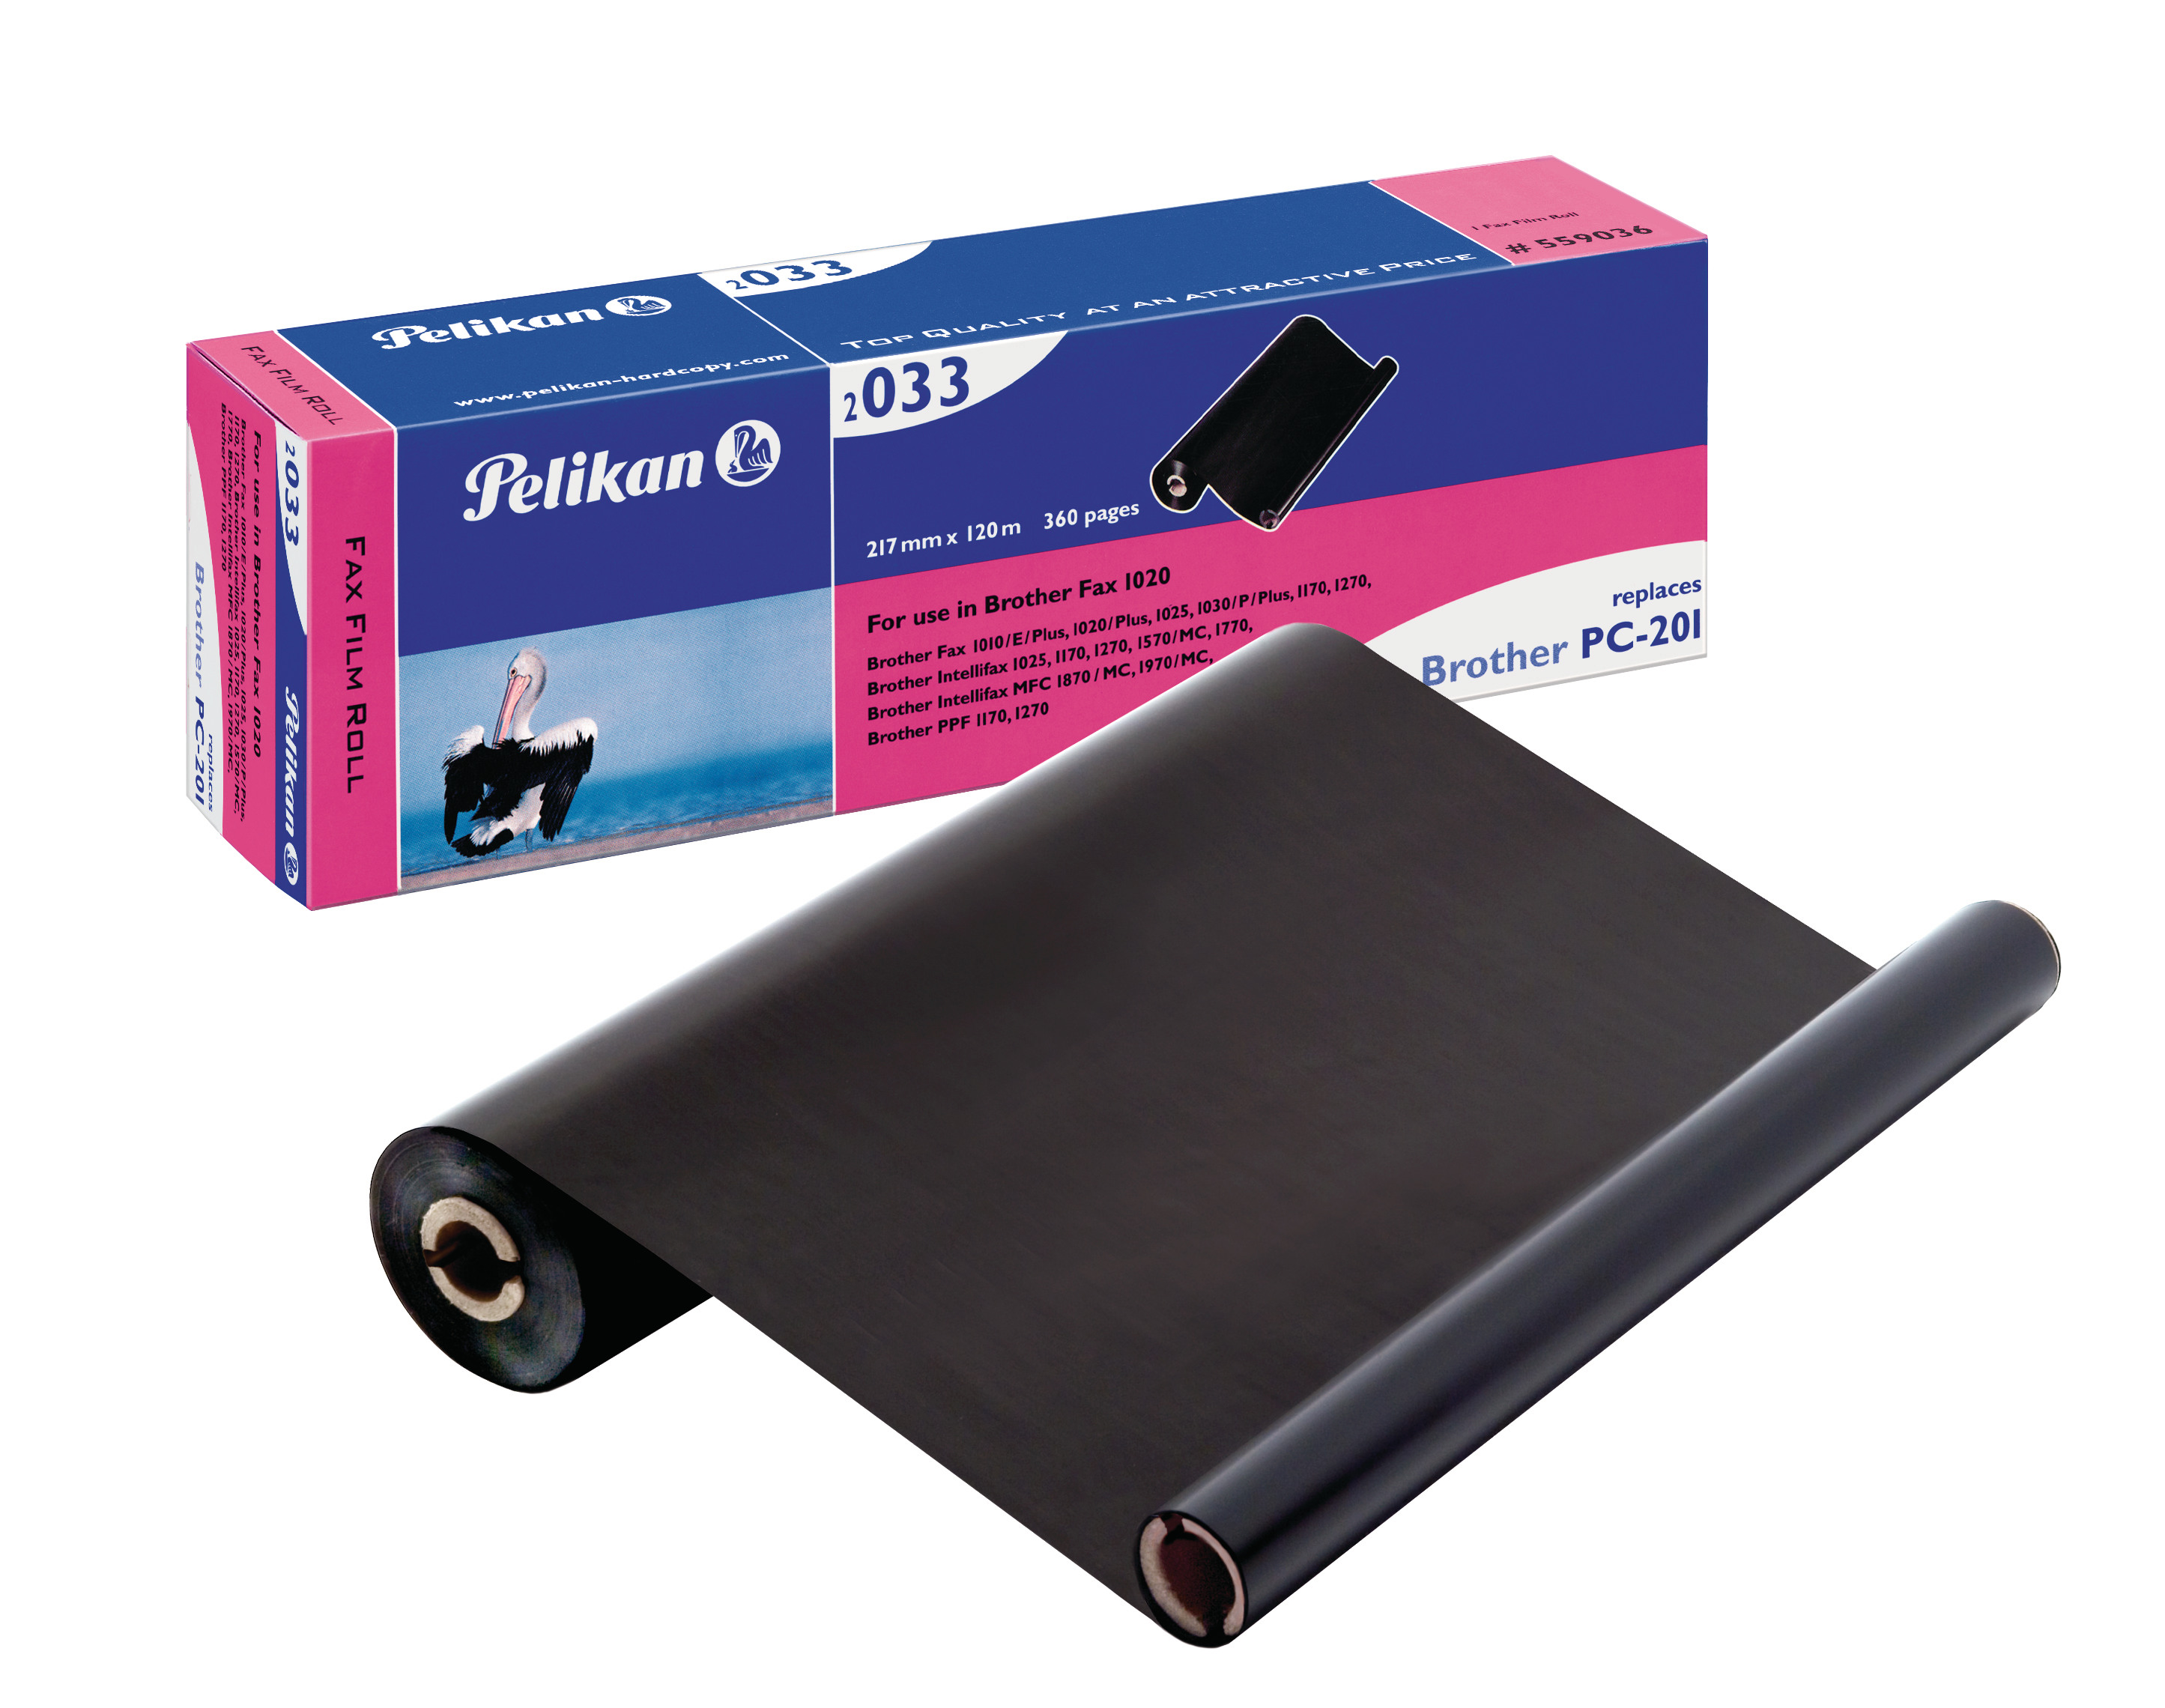 PELIKAN TTR-Refill schwarz PC-201 zu Brother Fax 1010 217mm/120m